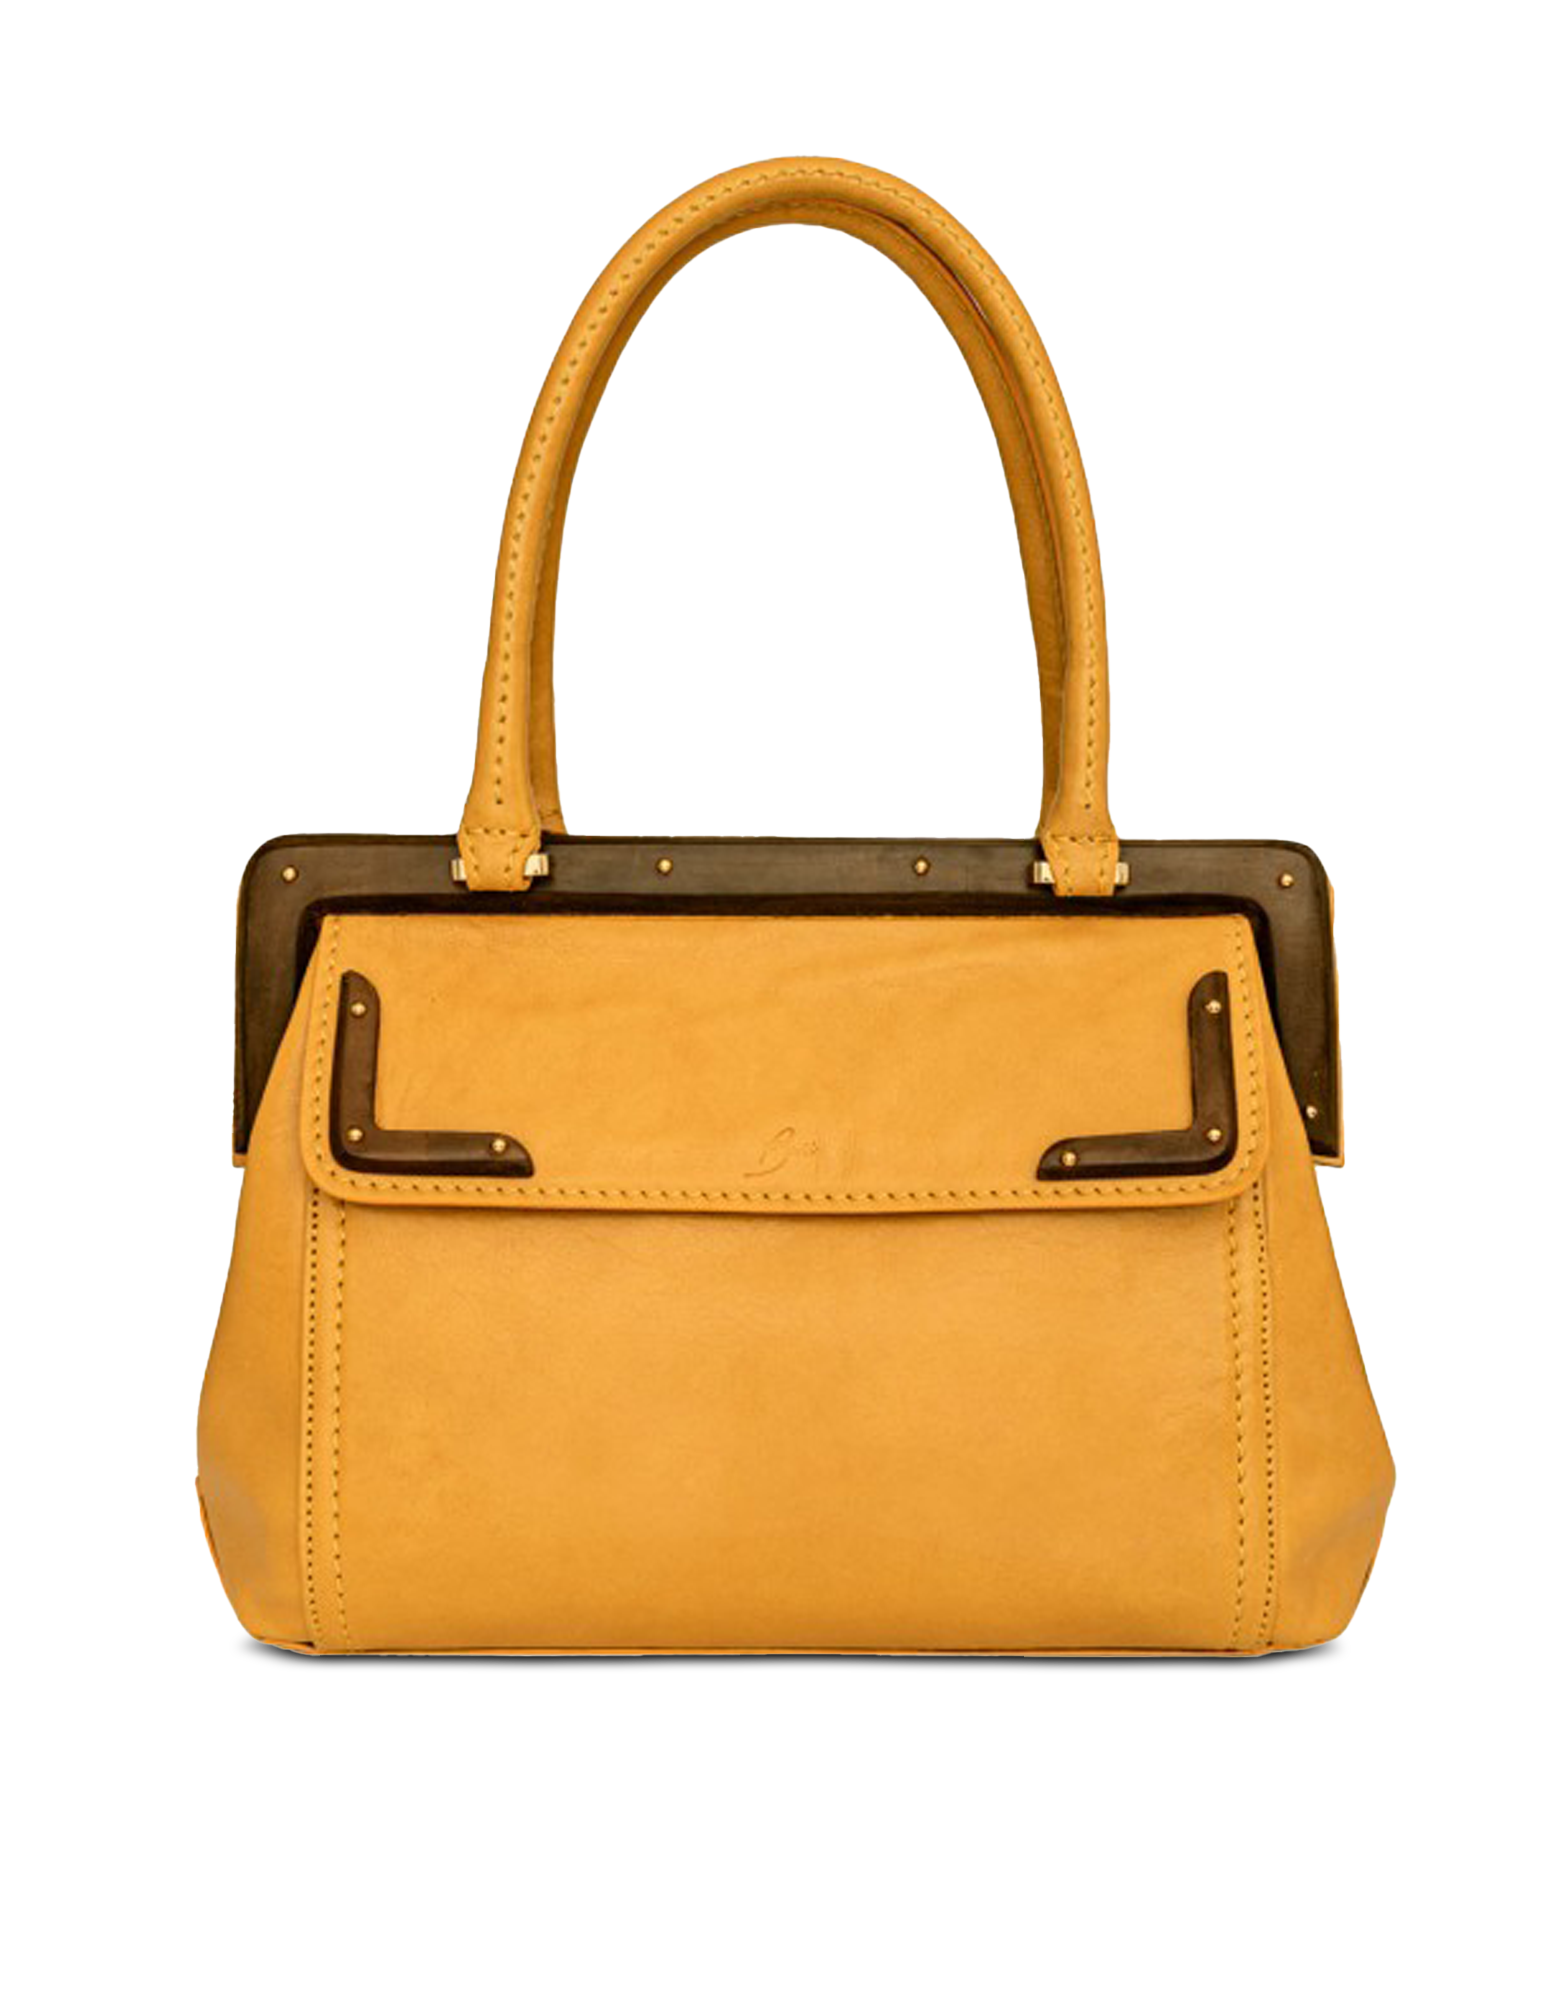 Buti 1630 Yellow Leather Large Top Handle Satchel Bag